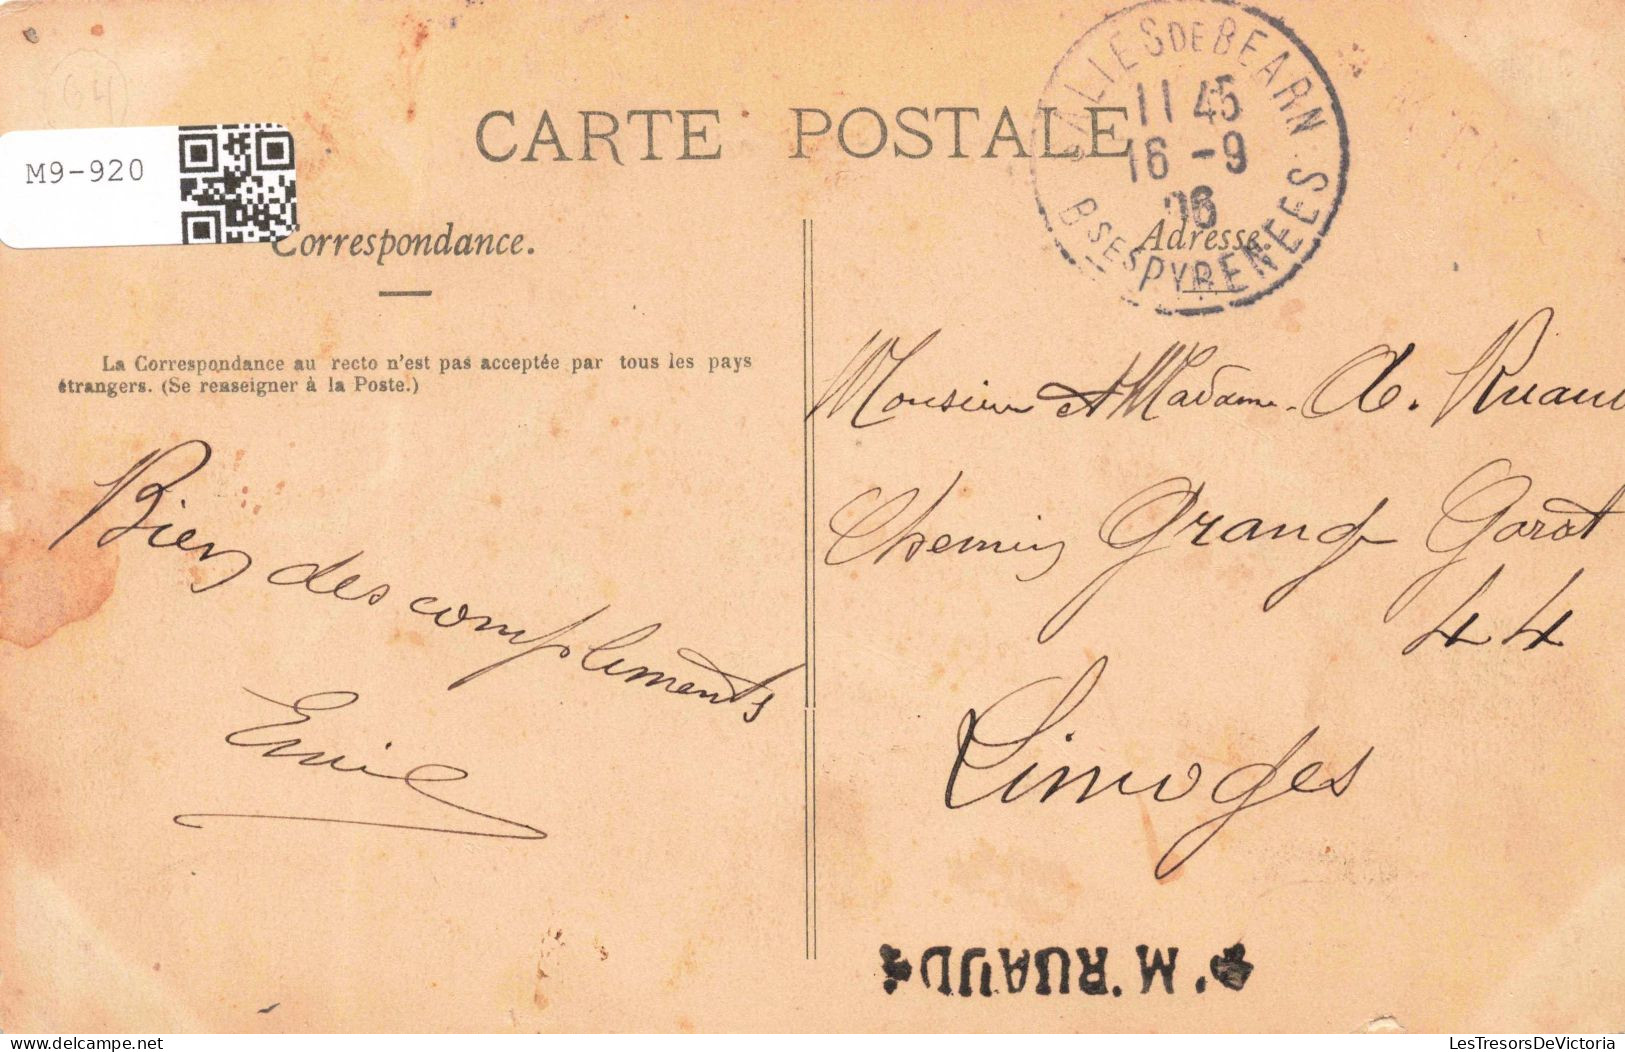 FRANCE - Oloron Sainte Marie - Salies De Béarn - Le Marché - Animé - Carte Postale Ancienne - Oloron Sainte Marie